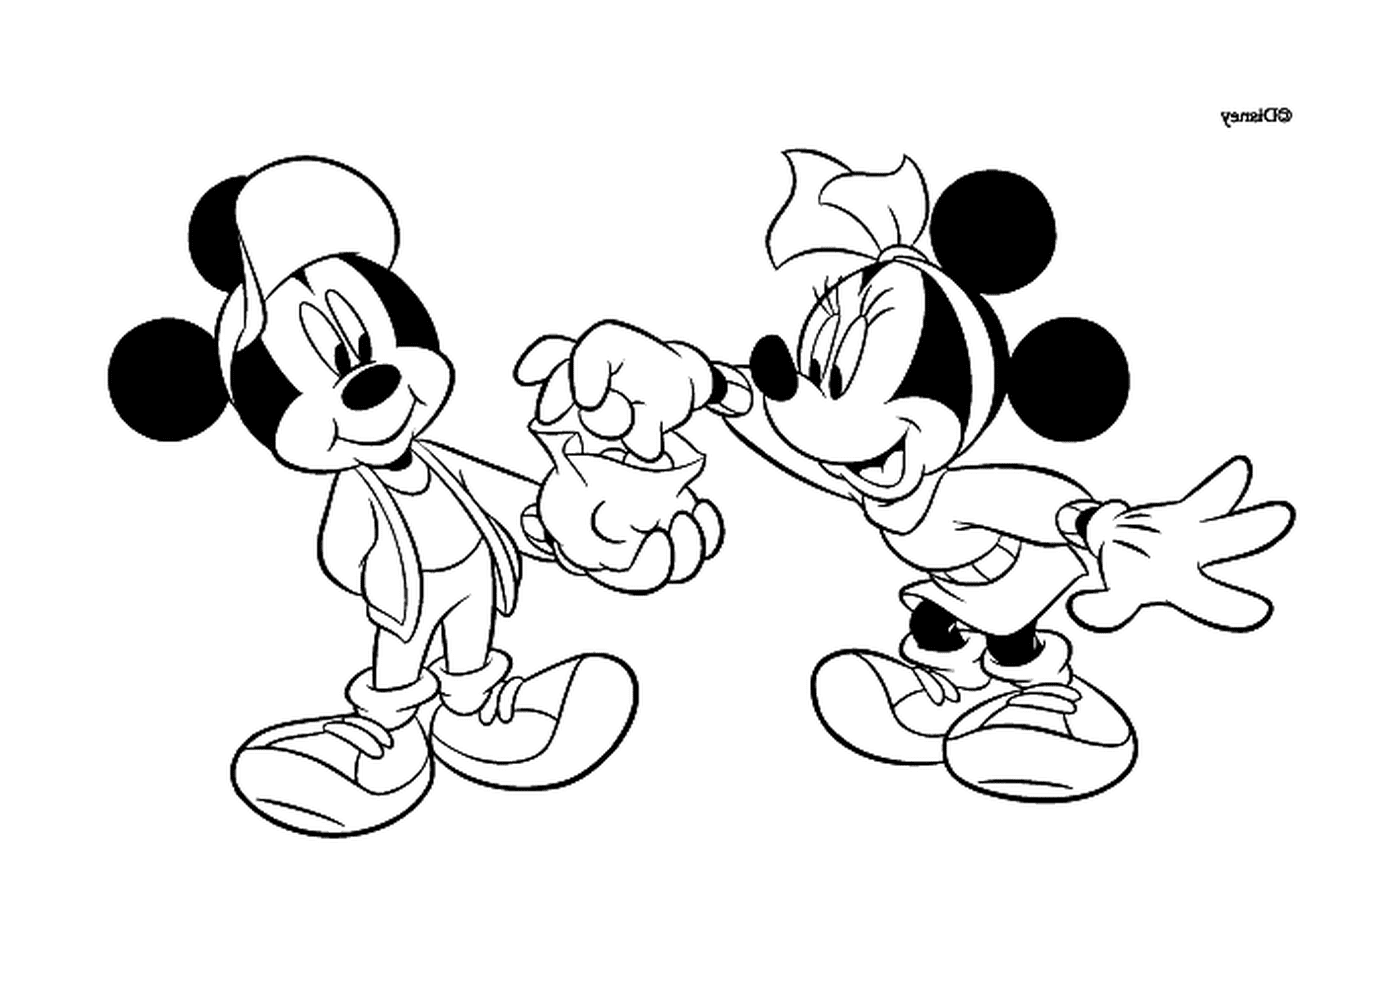   Mickey offre des bonbons à Minnie 